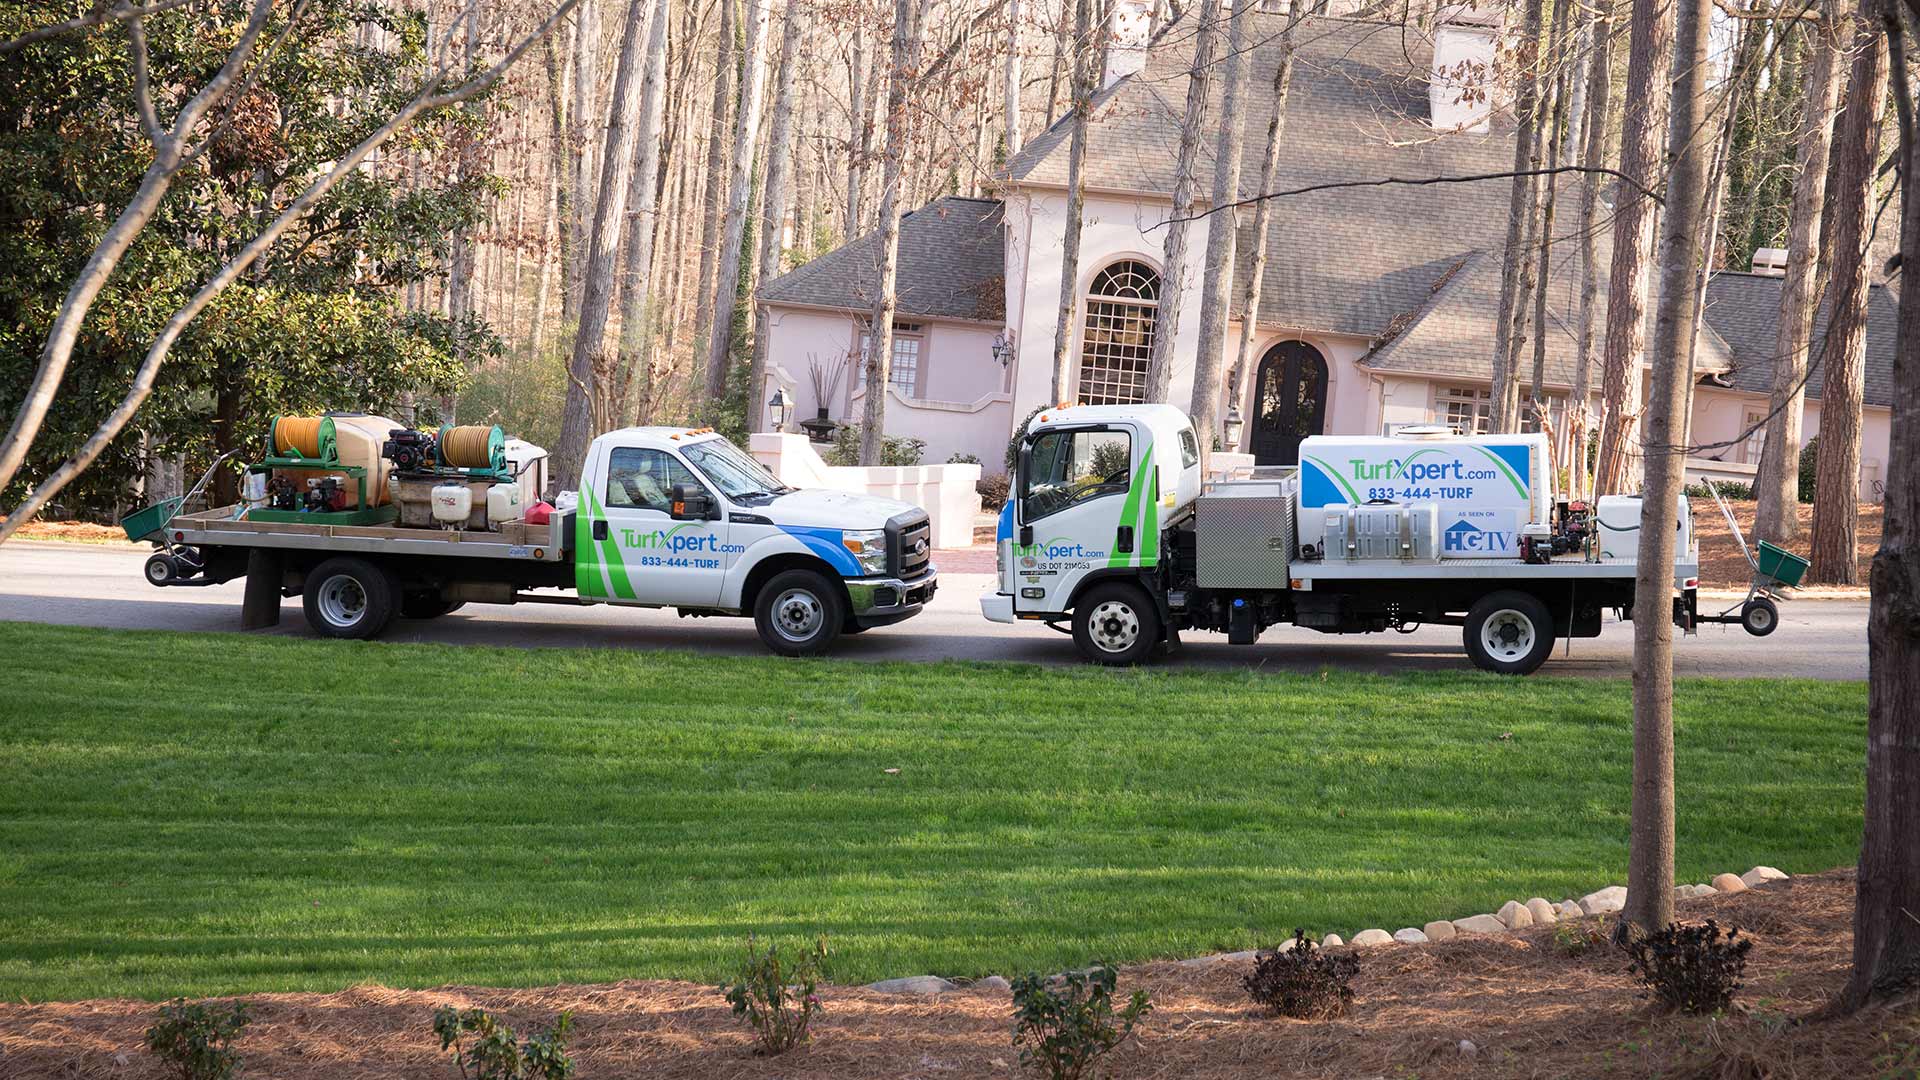 TurfXpert work crew providing lawn care to a home in Alpharetta, GA.